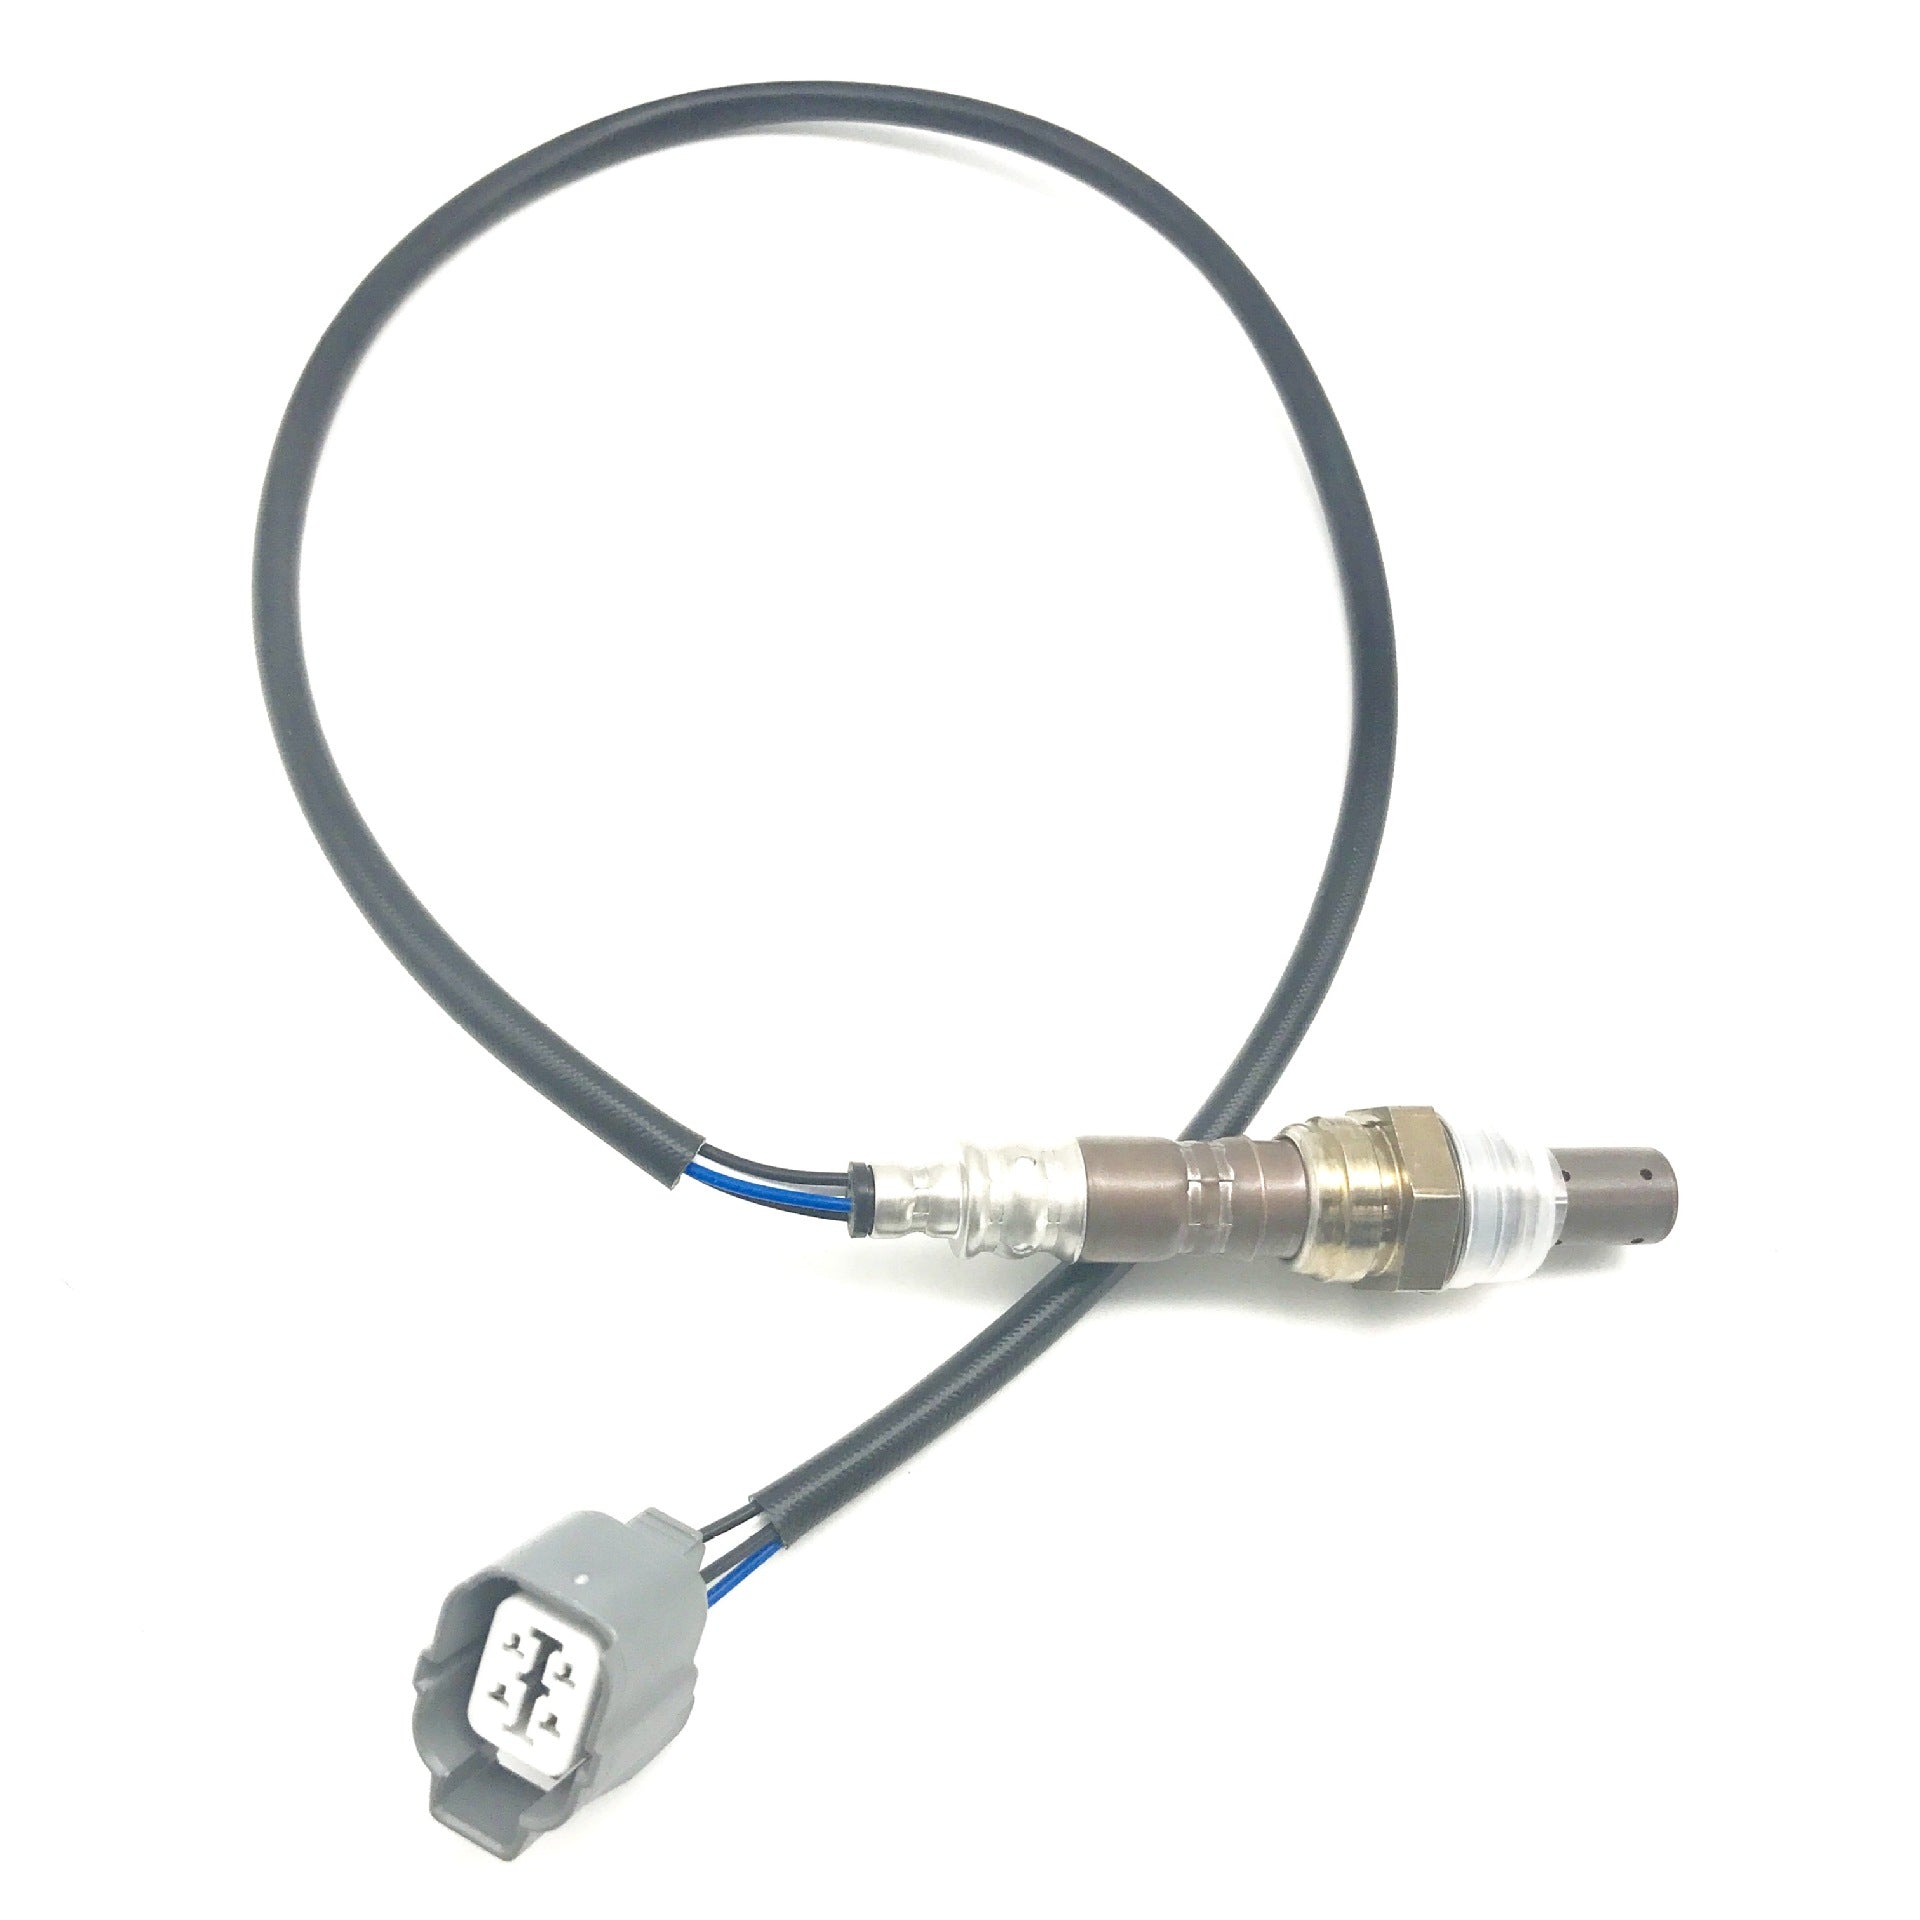 Dim Gray 2.0 MK7 CG9/98-03 CH7 front oxygen sensor (Front oxygen sensor)